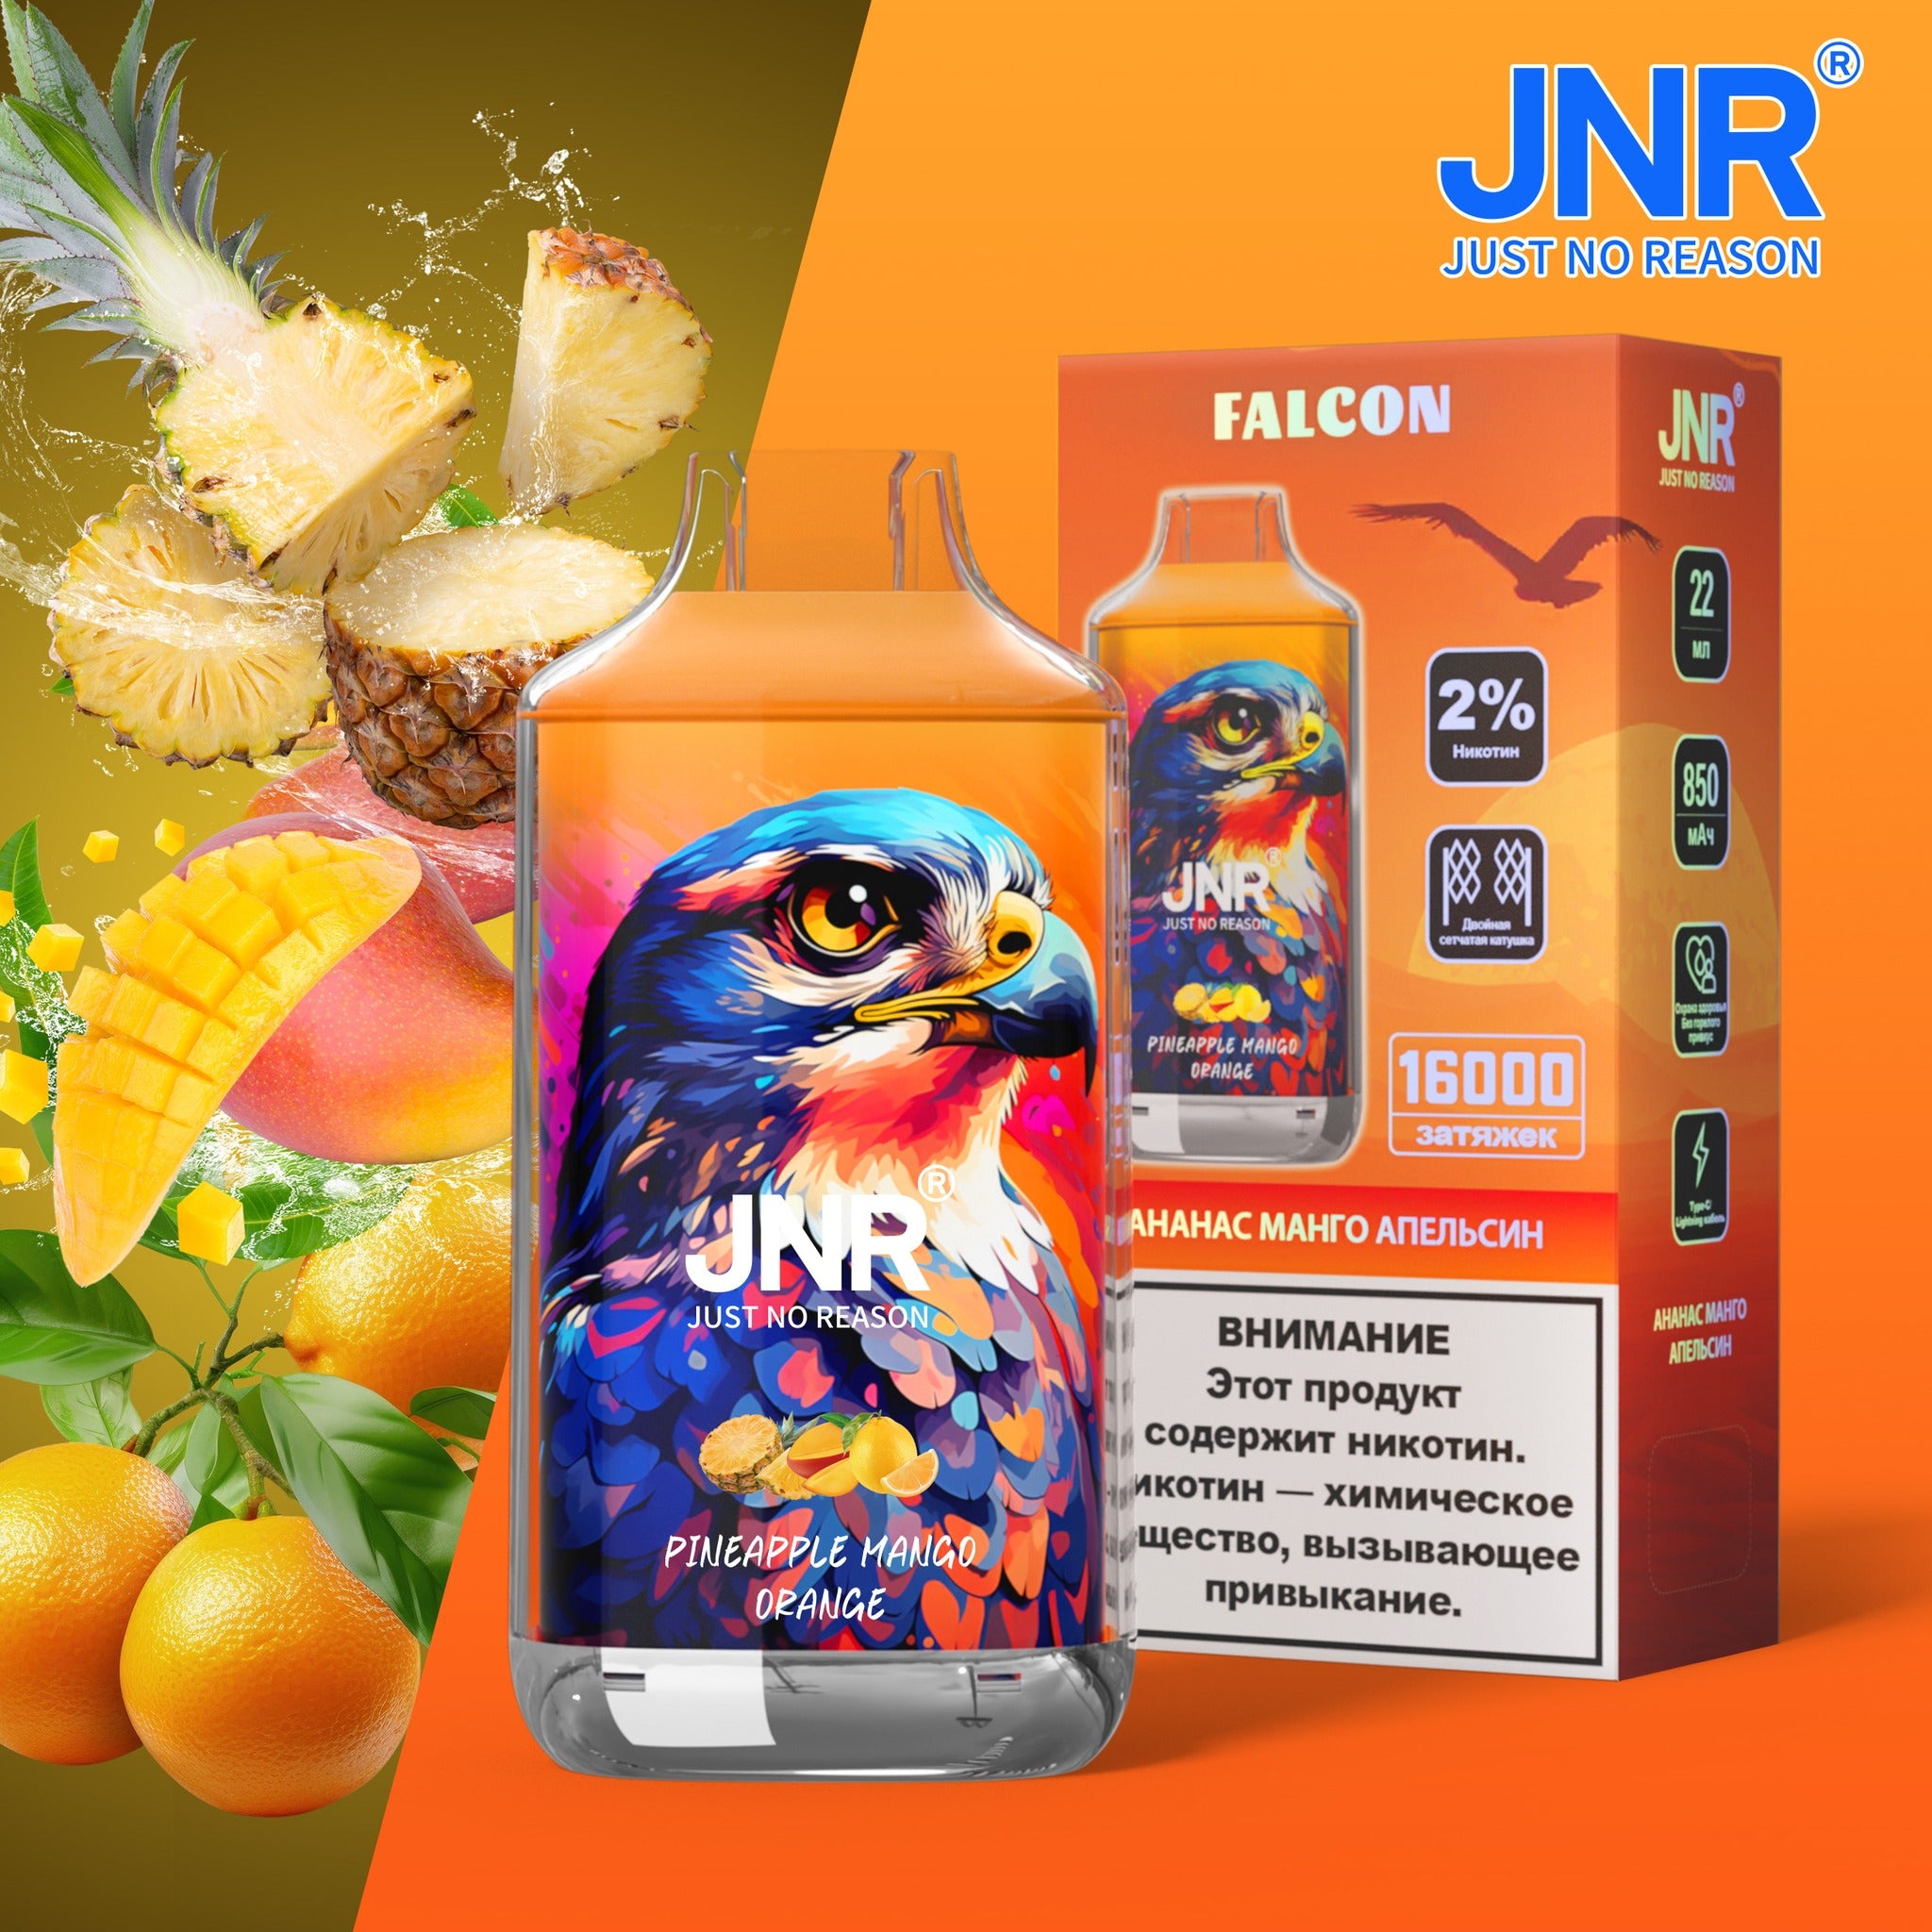 JNR FALCON 16000 PUFFS - PINEAPPLE MANGO ORANGE